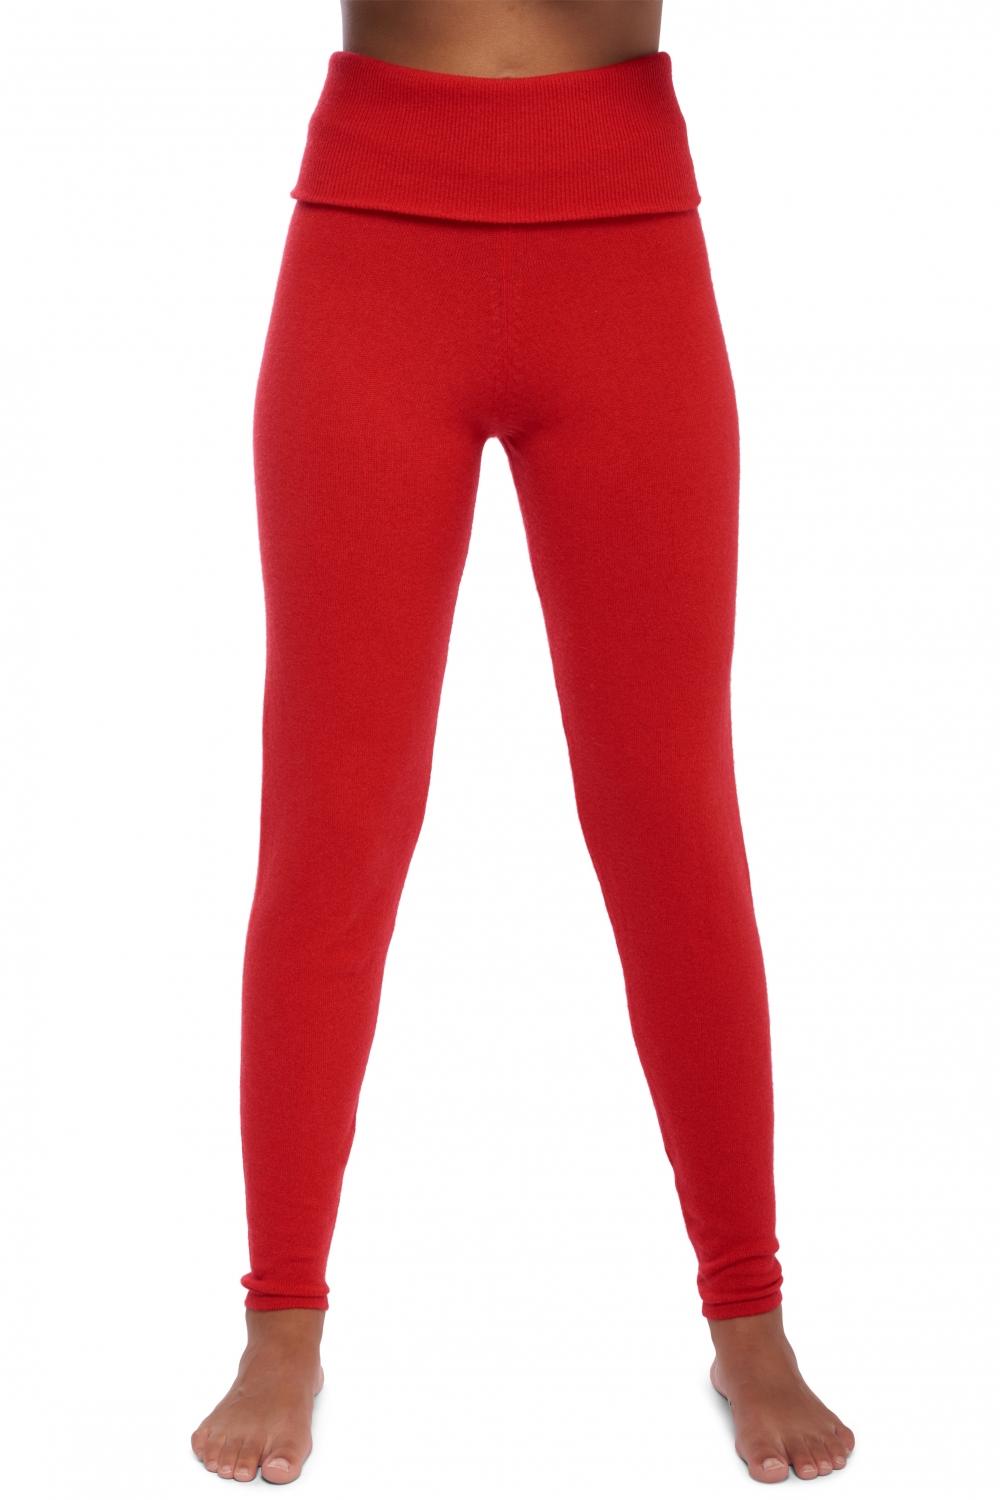 Cachemire accessoires homewear shirley rouge xl